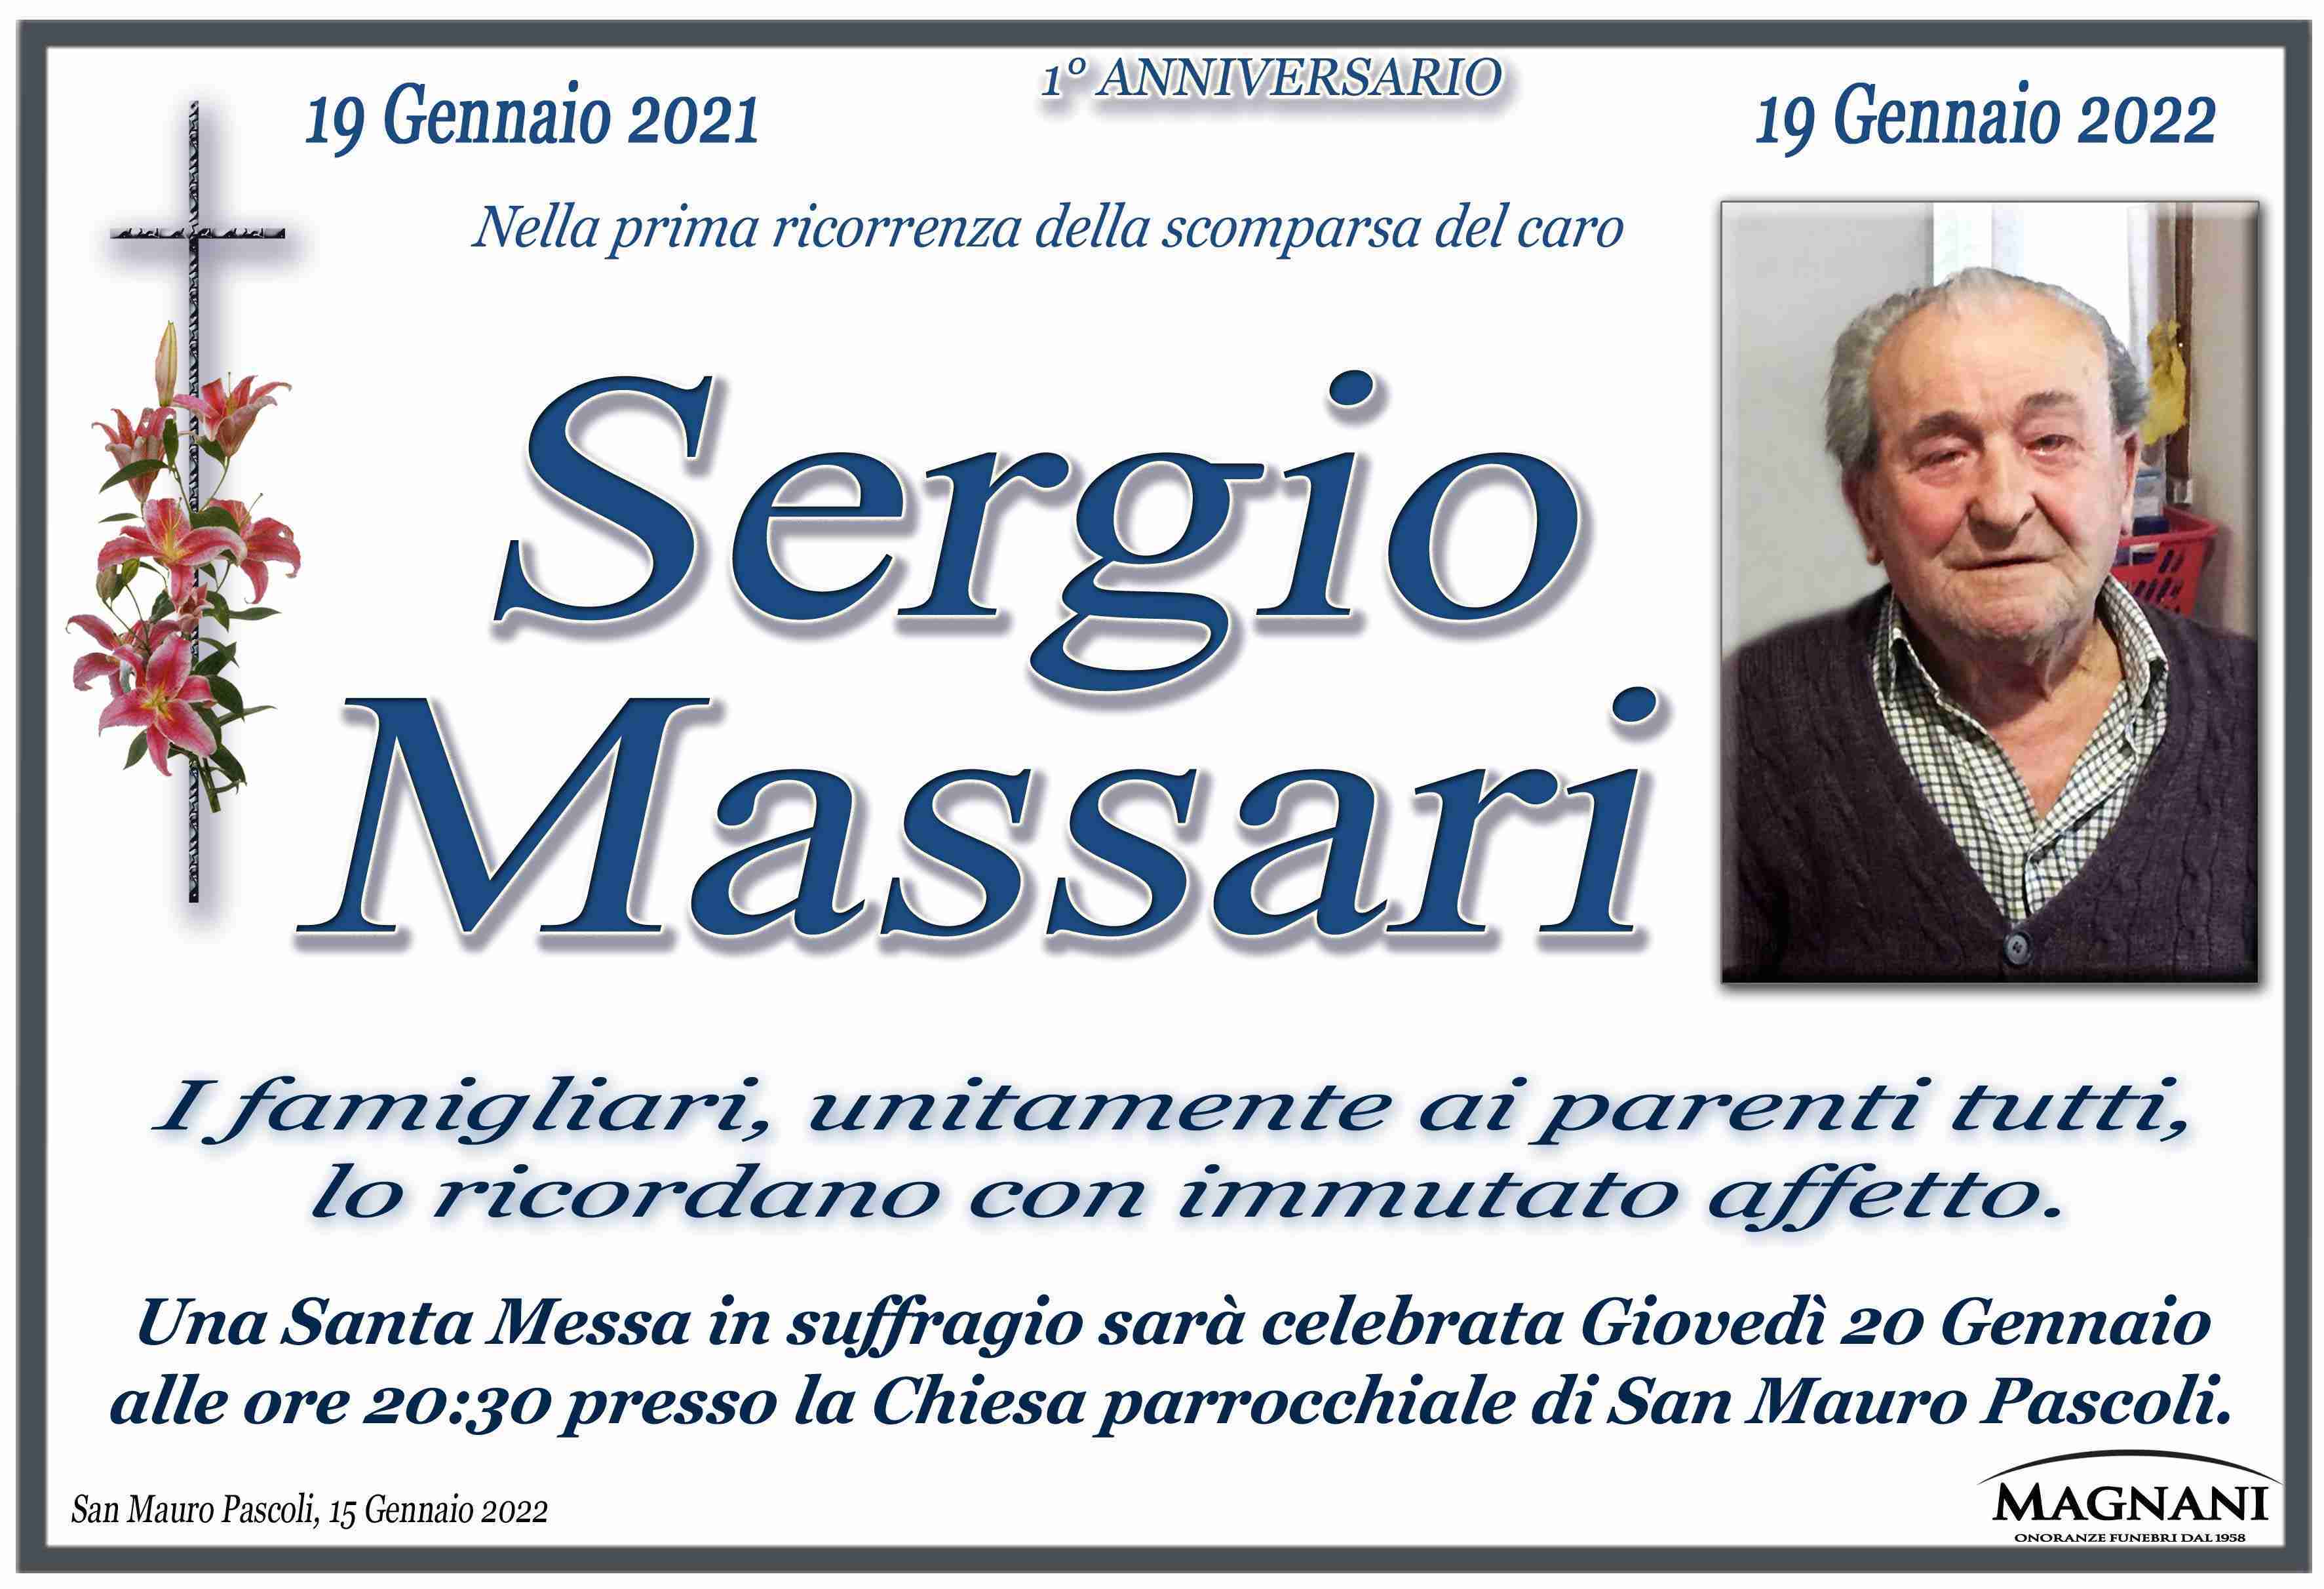 Sergio Massari